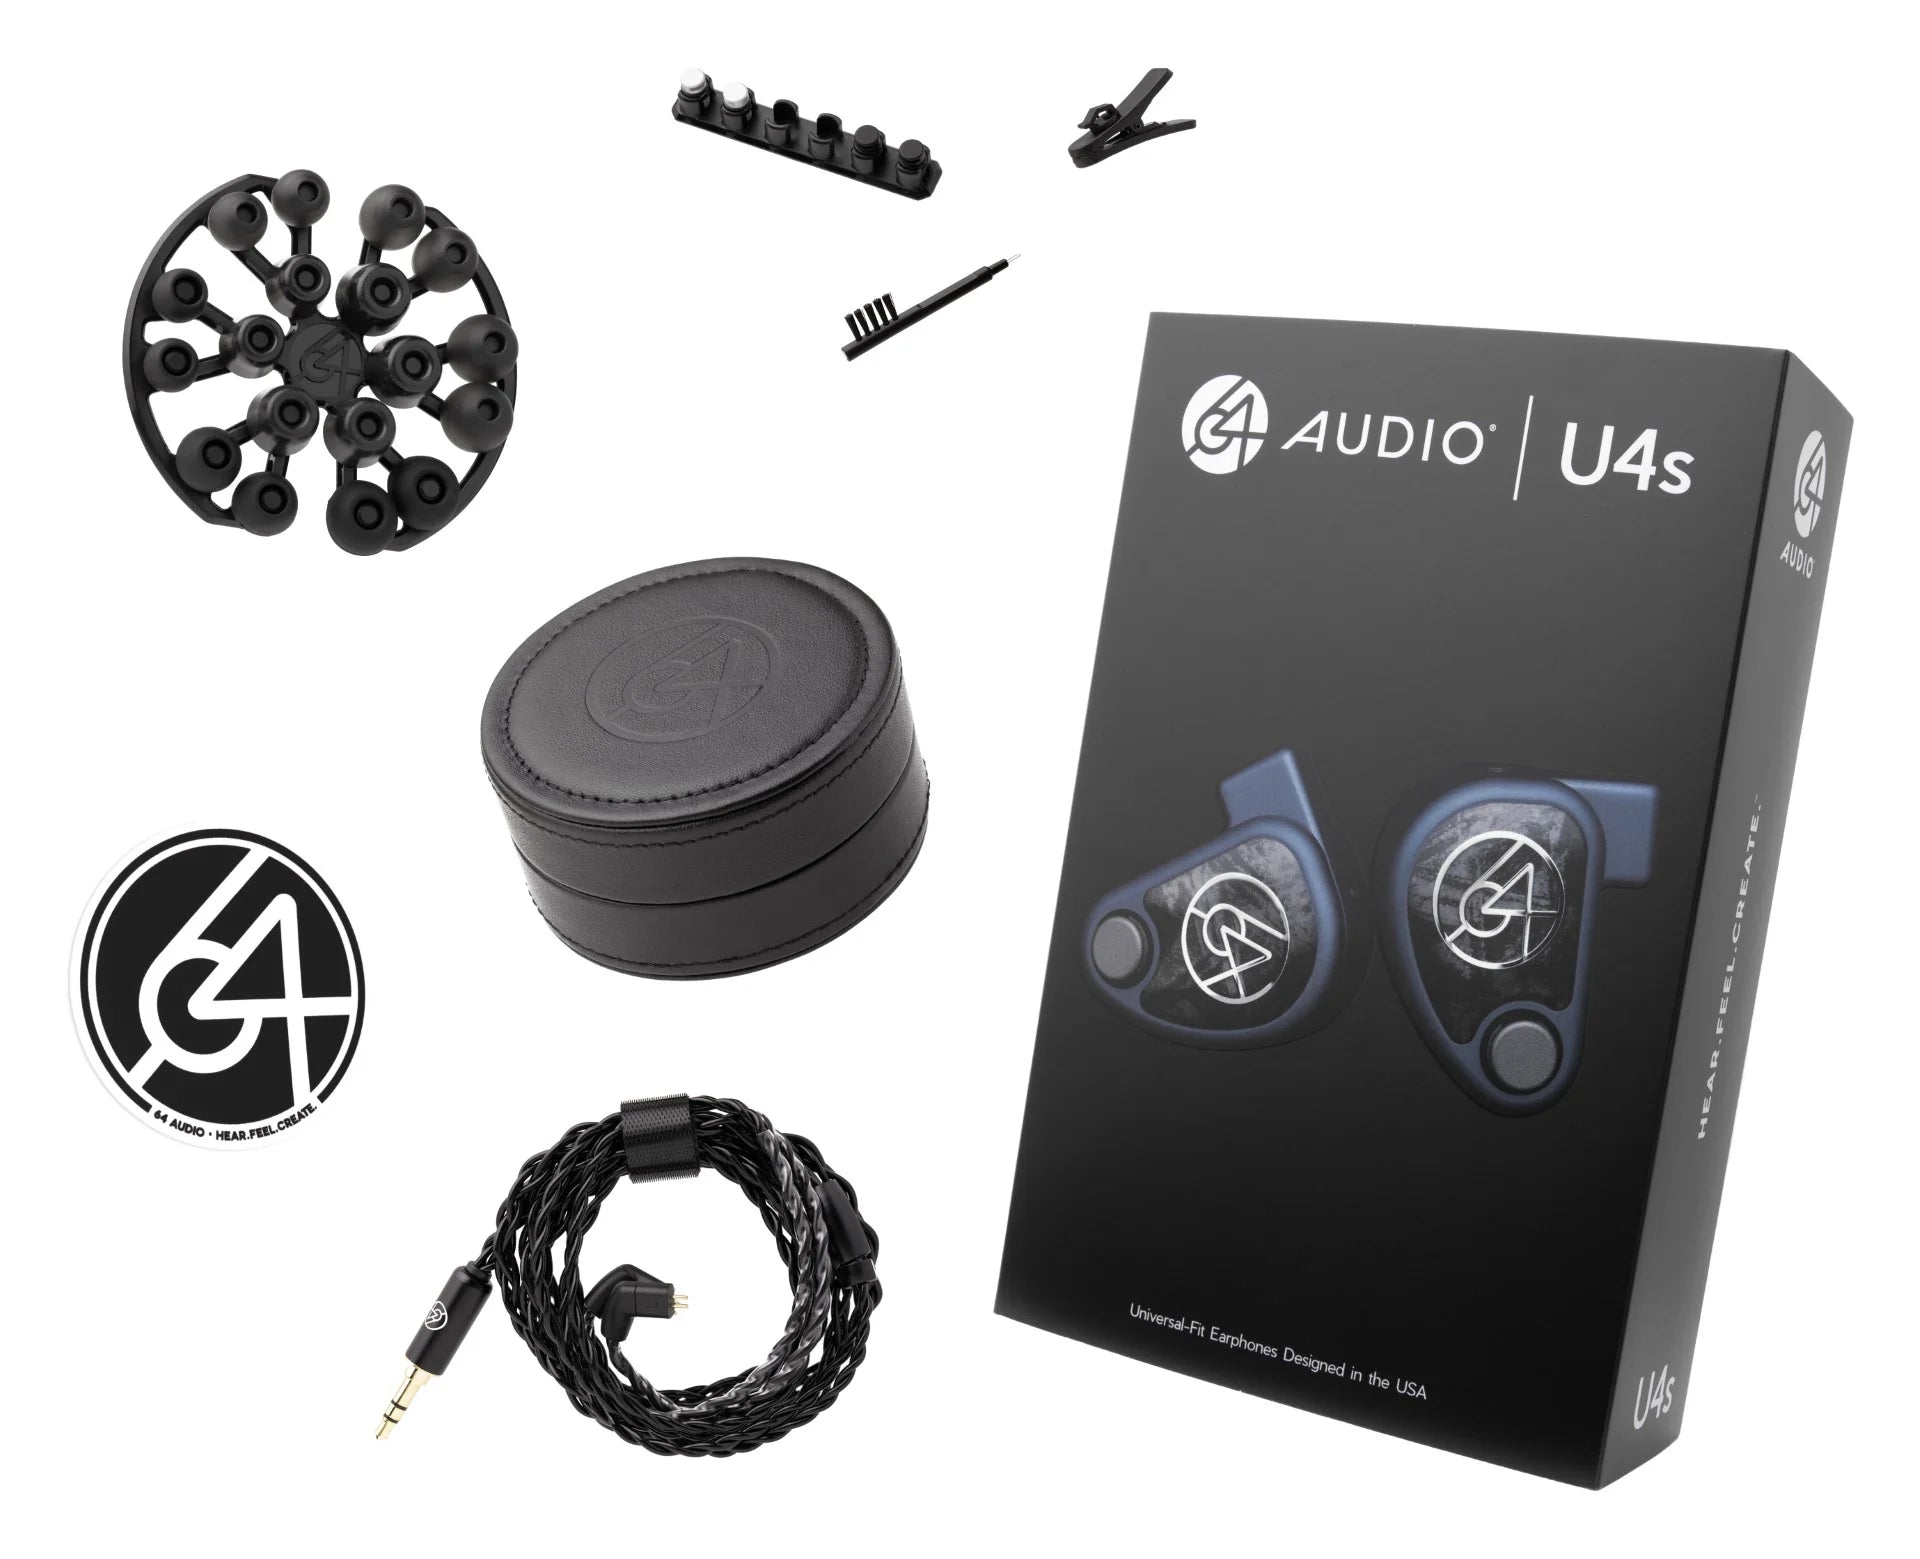 64 Audio U4s - Four Drivers Universal IEM